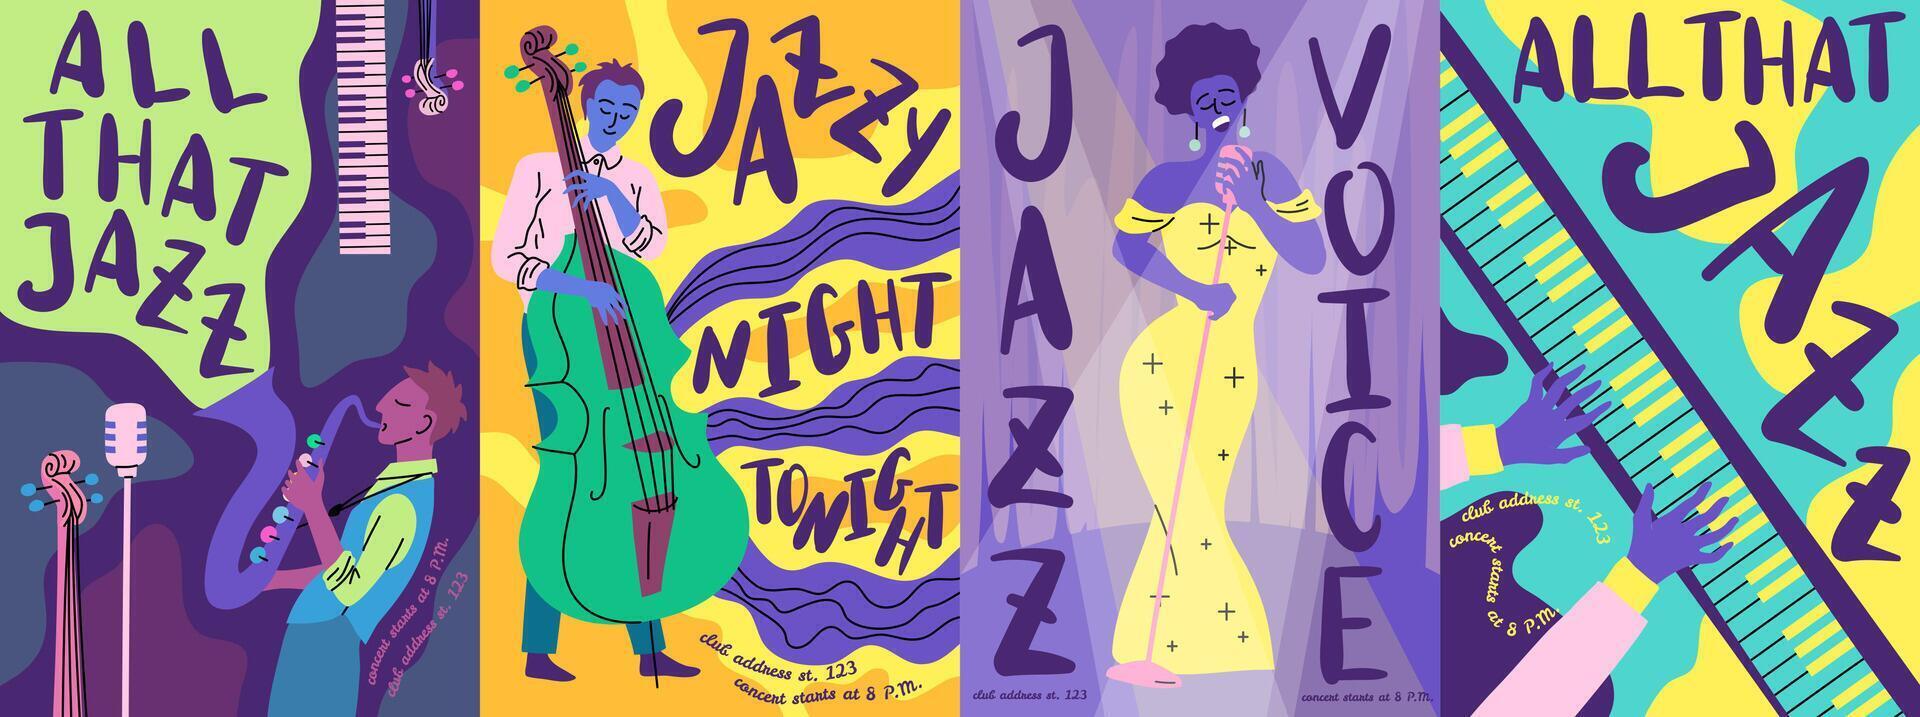 Cartoon Color Jazz Music Festival Poster Card Set. Vector